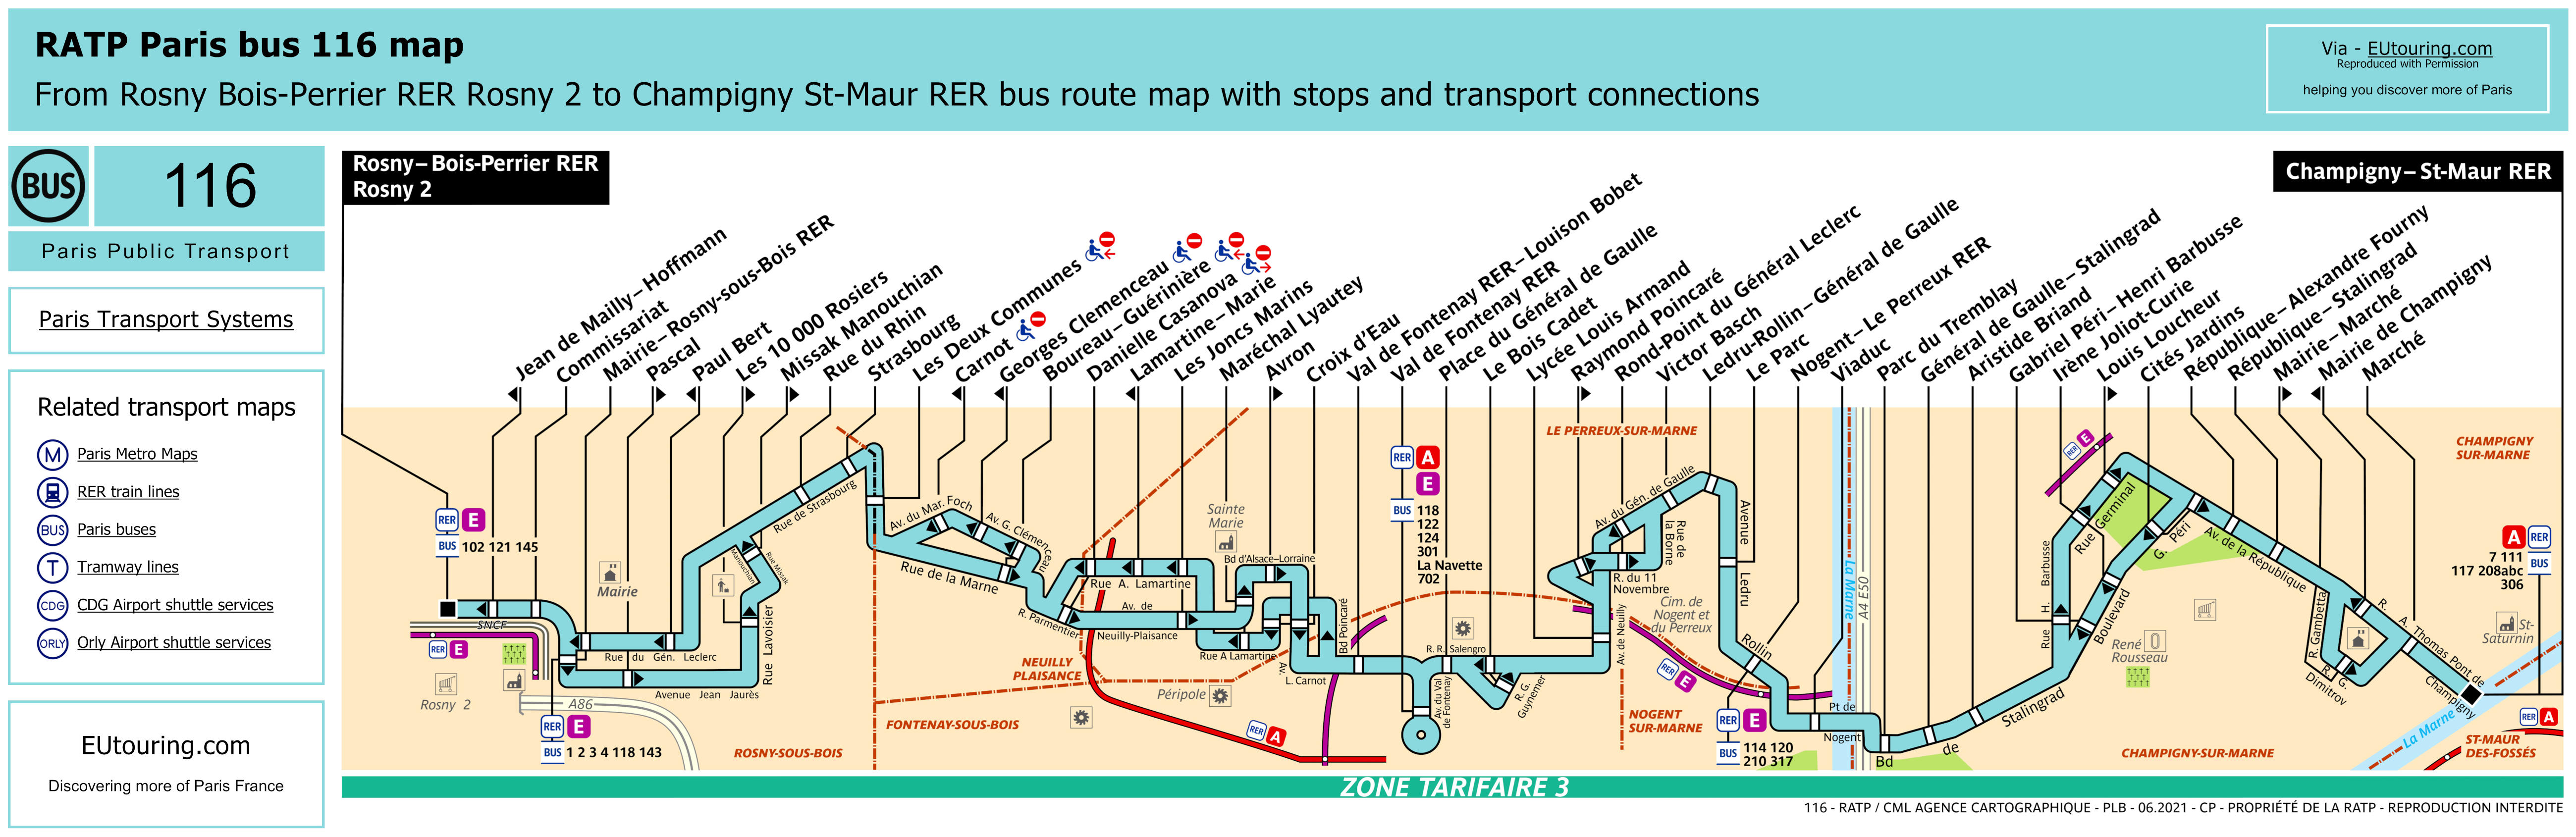 ratp route maps for paris bus lines 110 through to 119